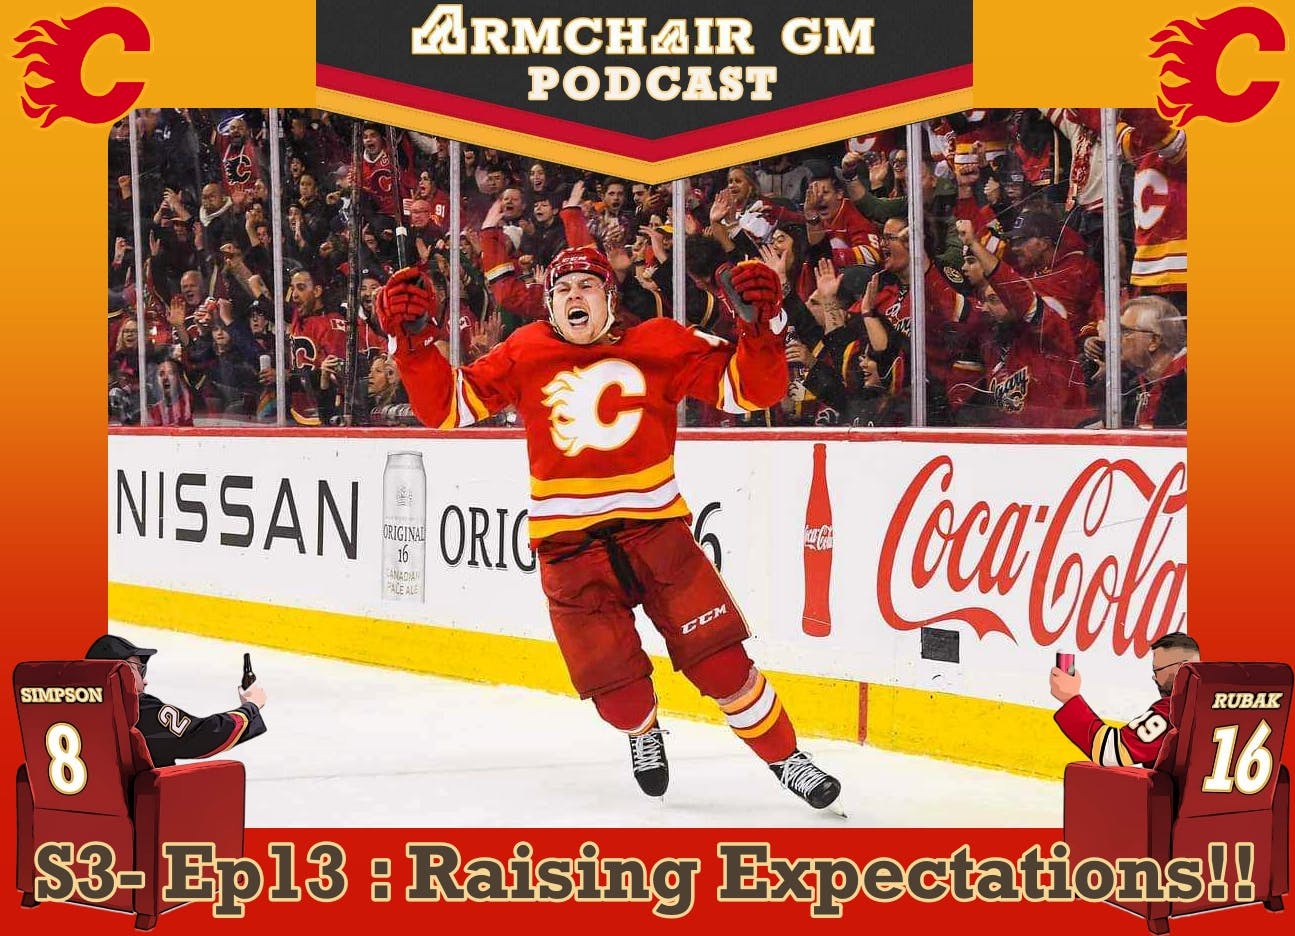 ArmChair GM Podcast S3 - Ep13 Raising Expectations?